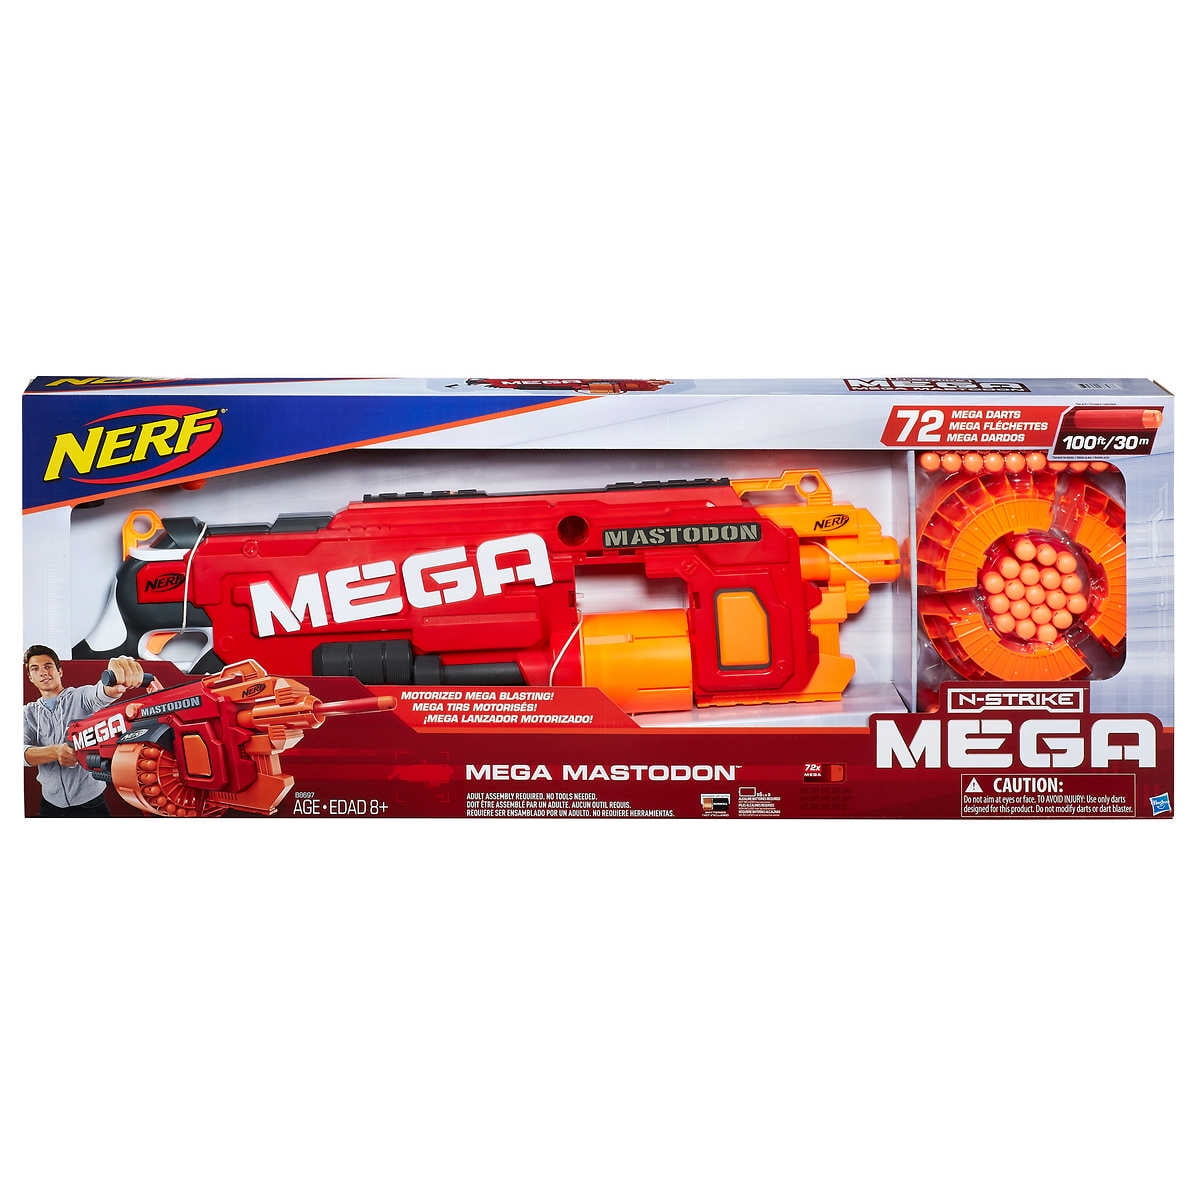 Nerf N-Strike Mega Mastodon Mega Blaster and 72 Mega Darts